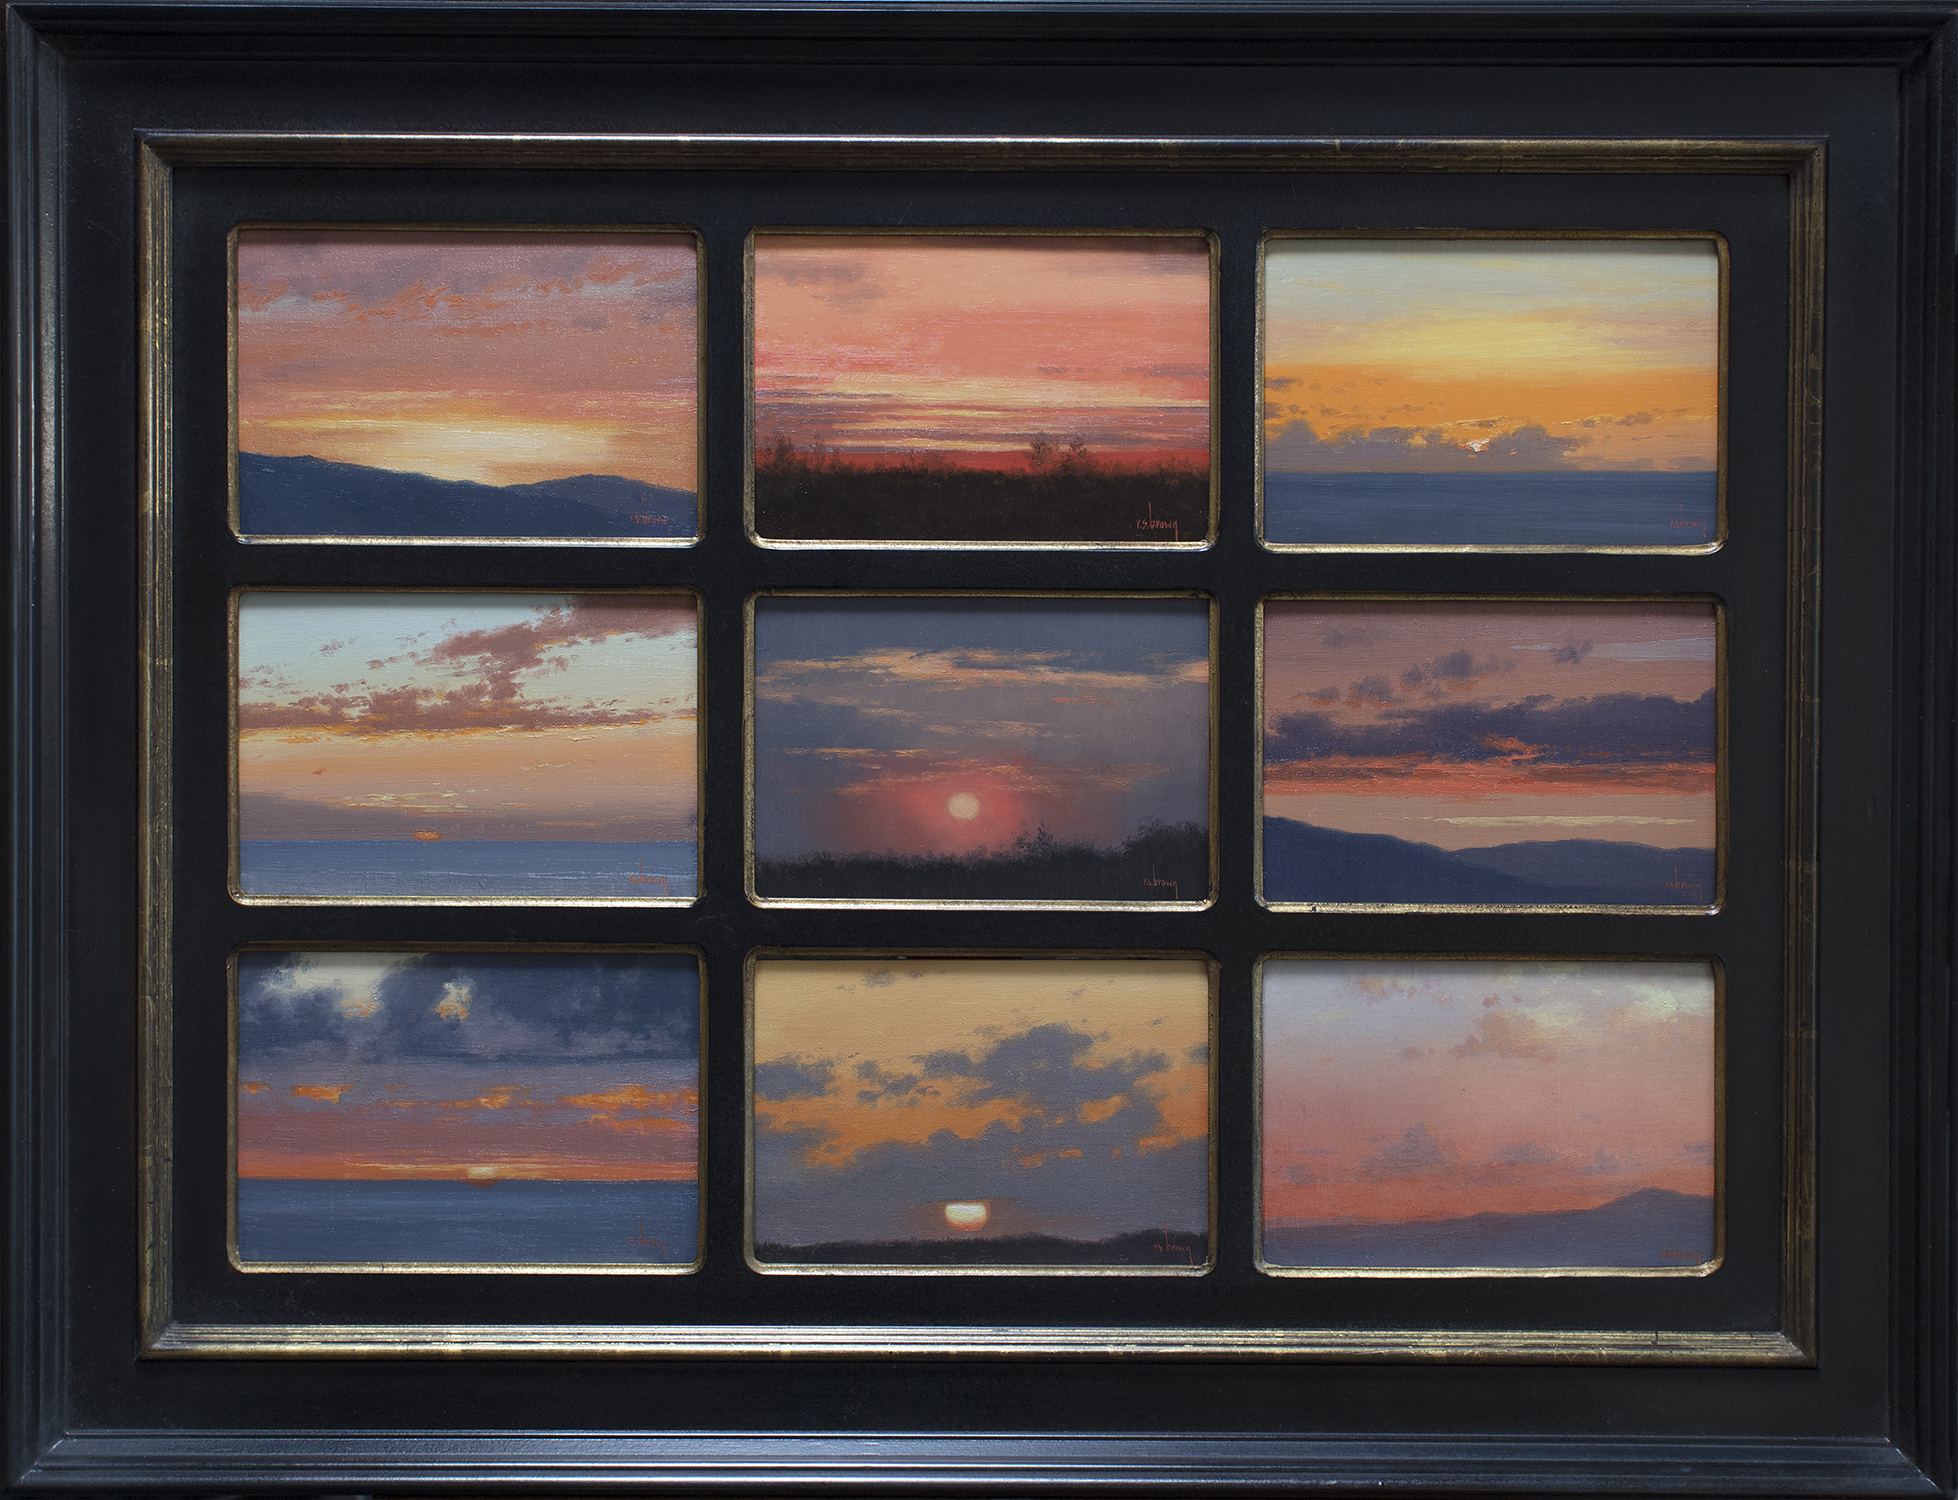 ryan_brown_rb1009_sunset_collection_framed.jpg